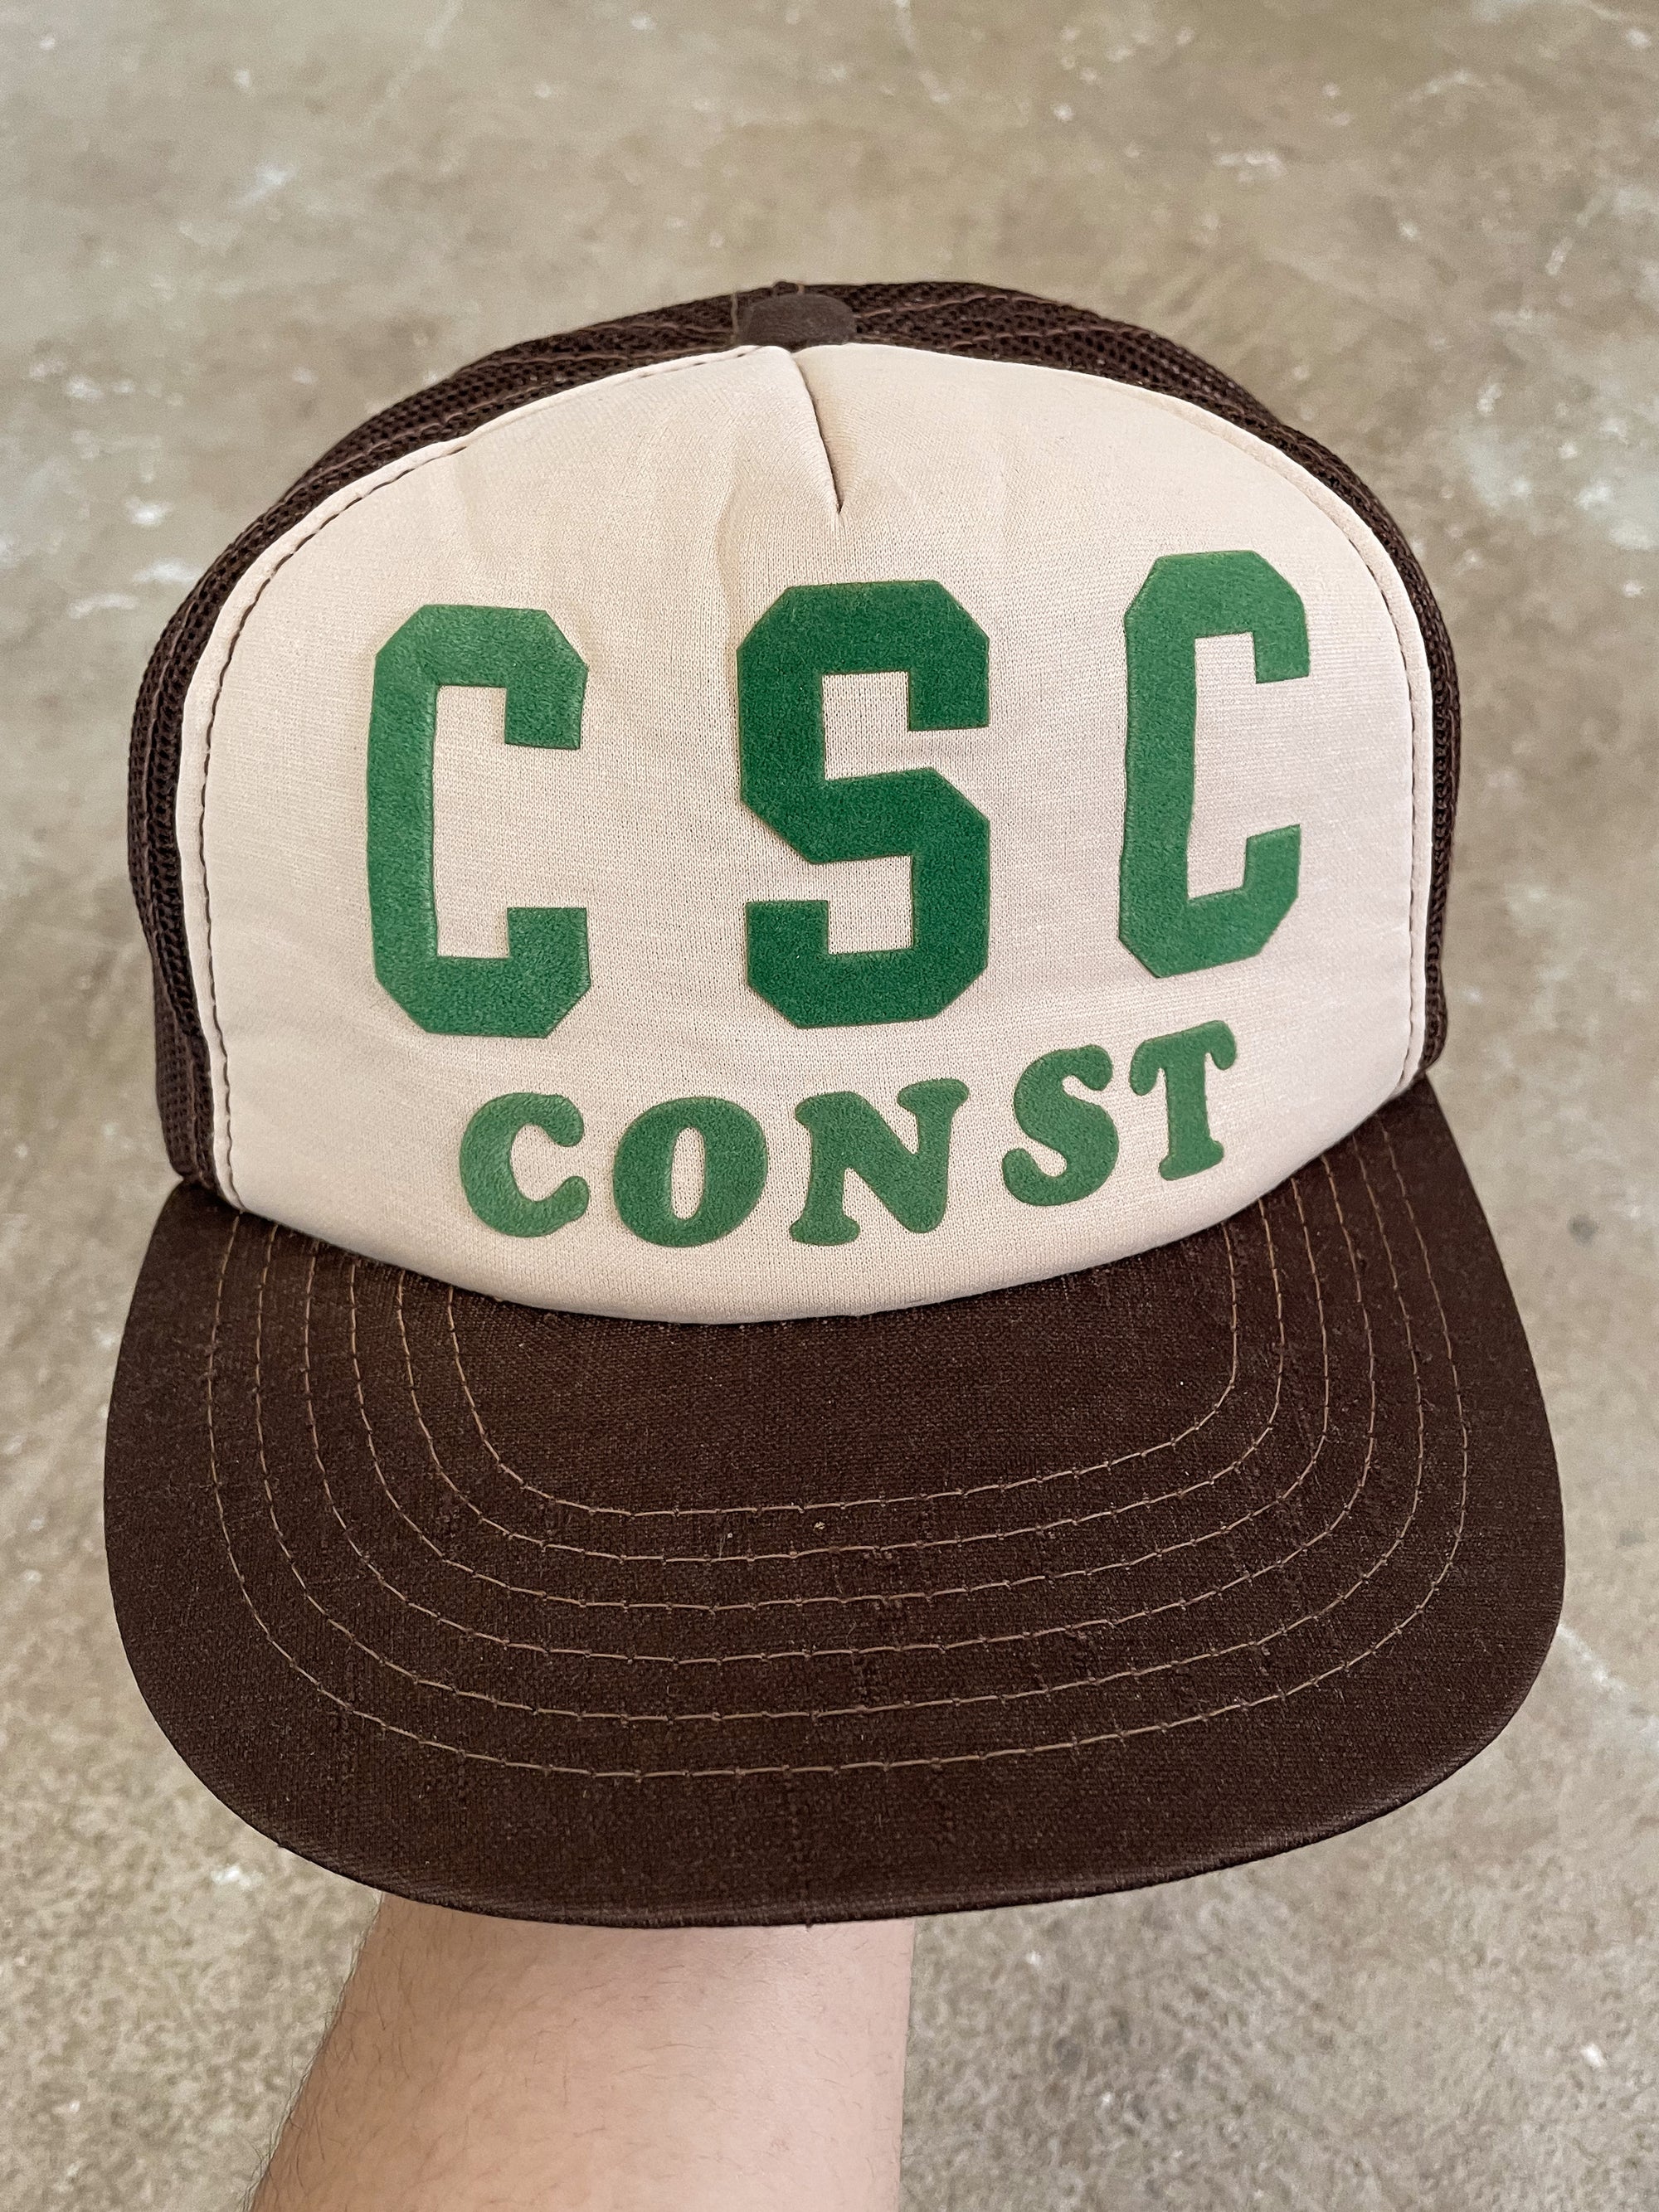 1980s “CSC Construction” Trucker Hat